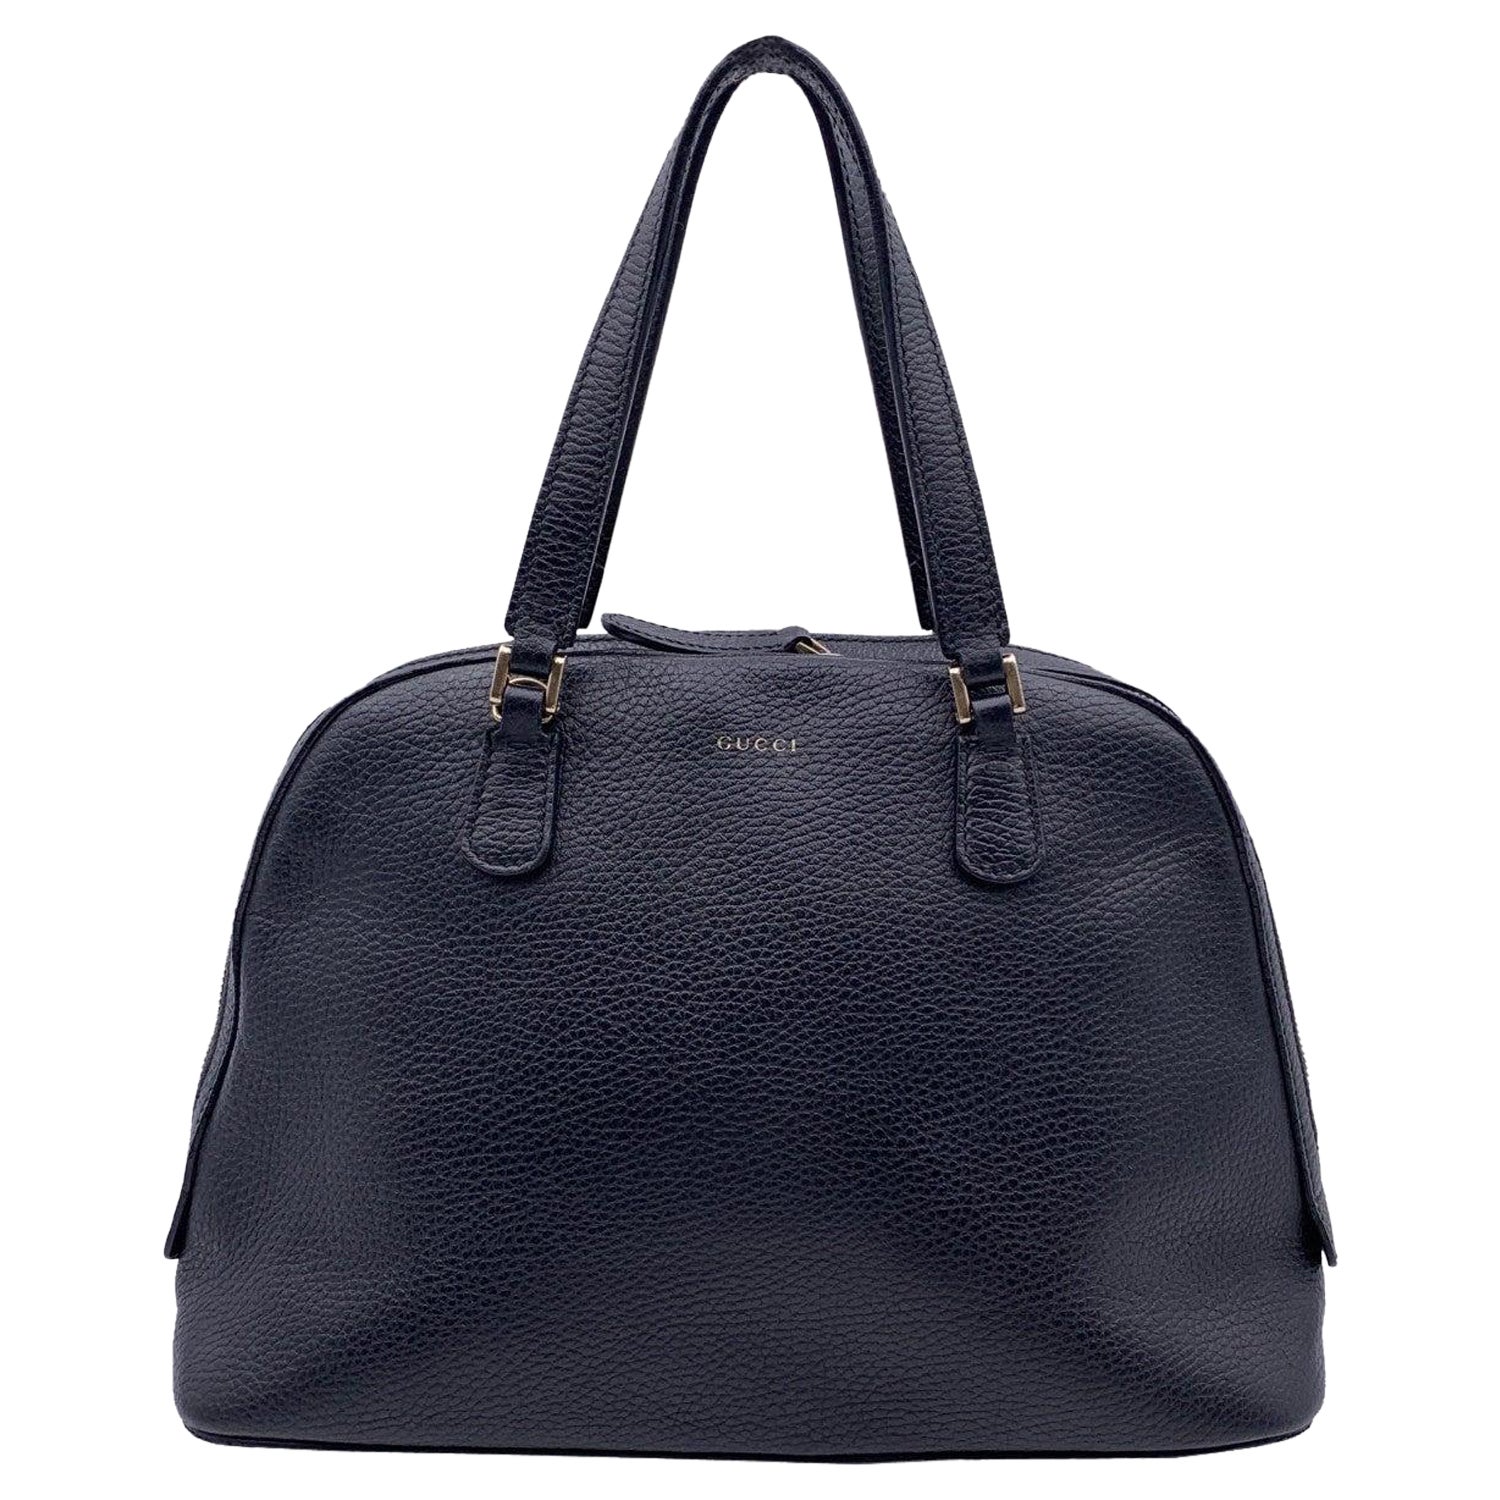 Gucci Black Leather Lady Dollar Dome Satchel Bag Handbag